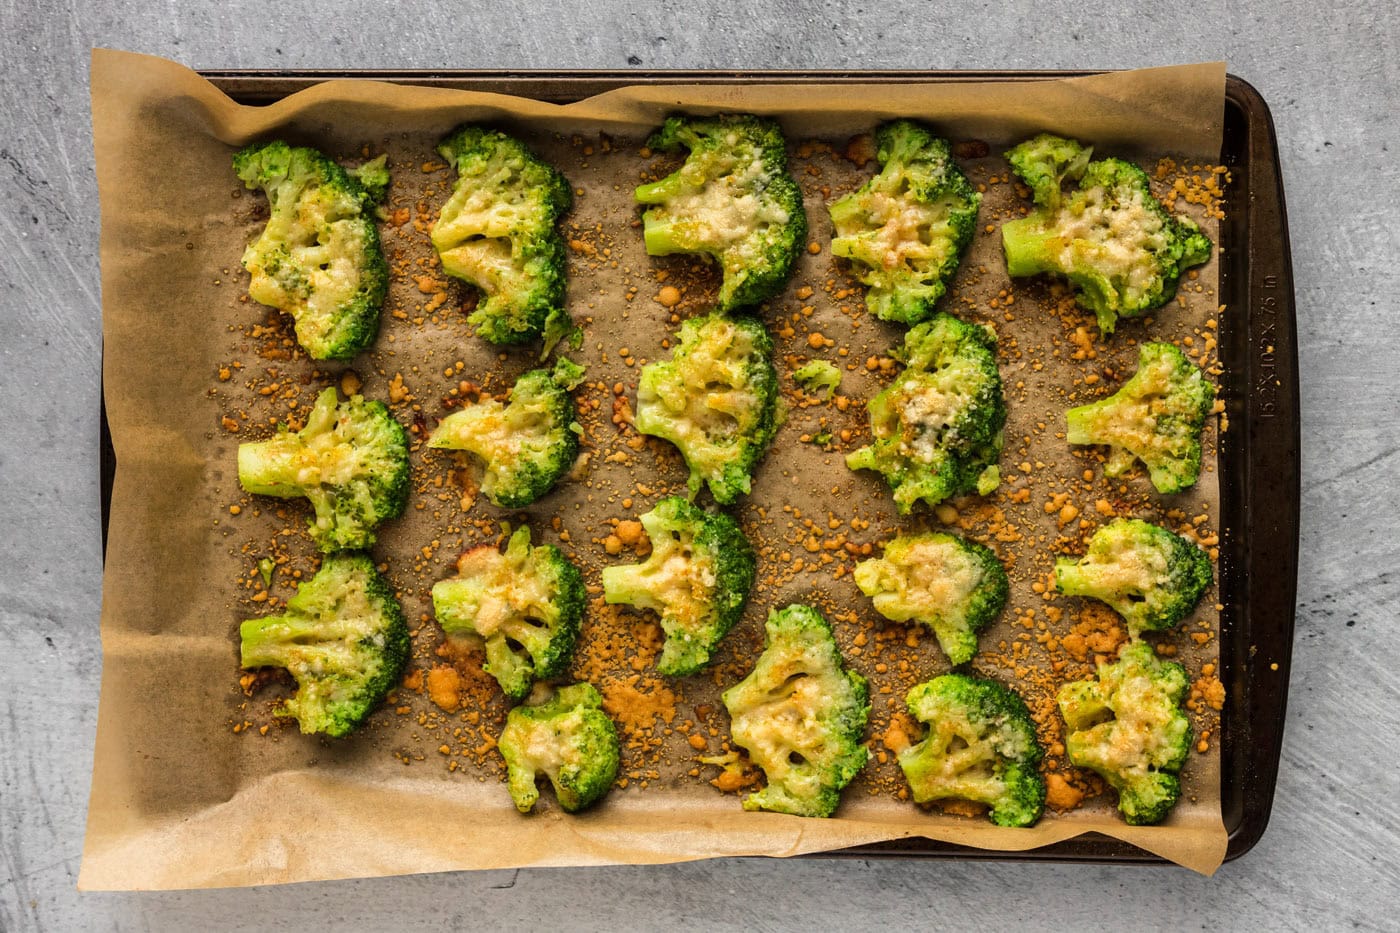 baked smashed broccoli florets on a baking sheet